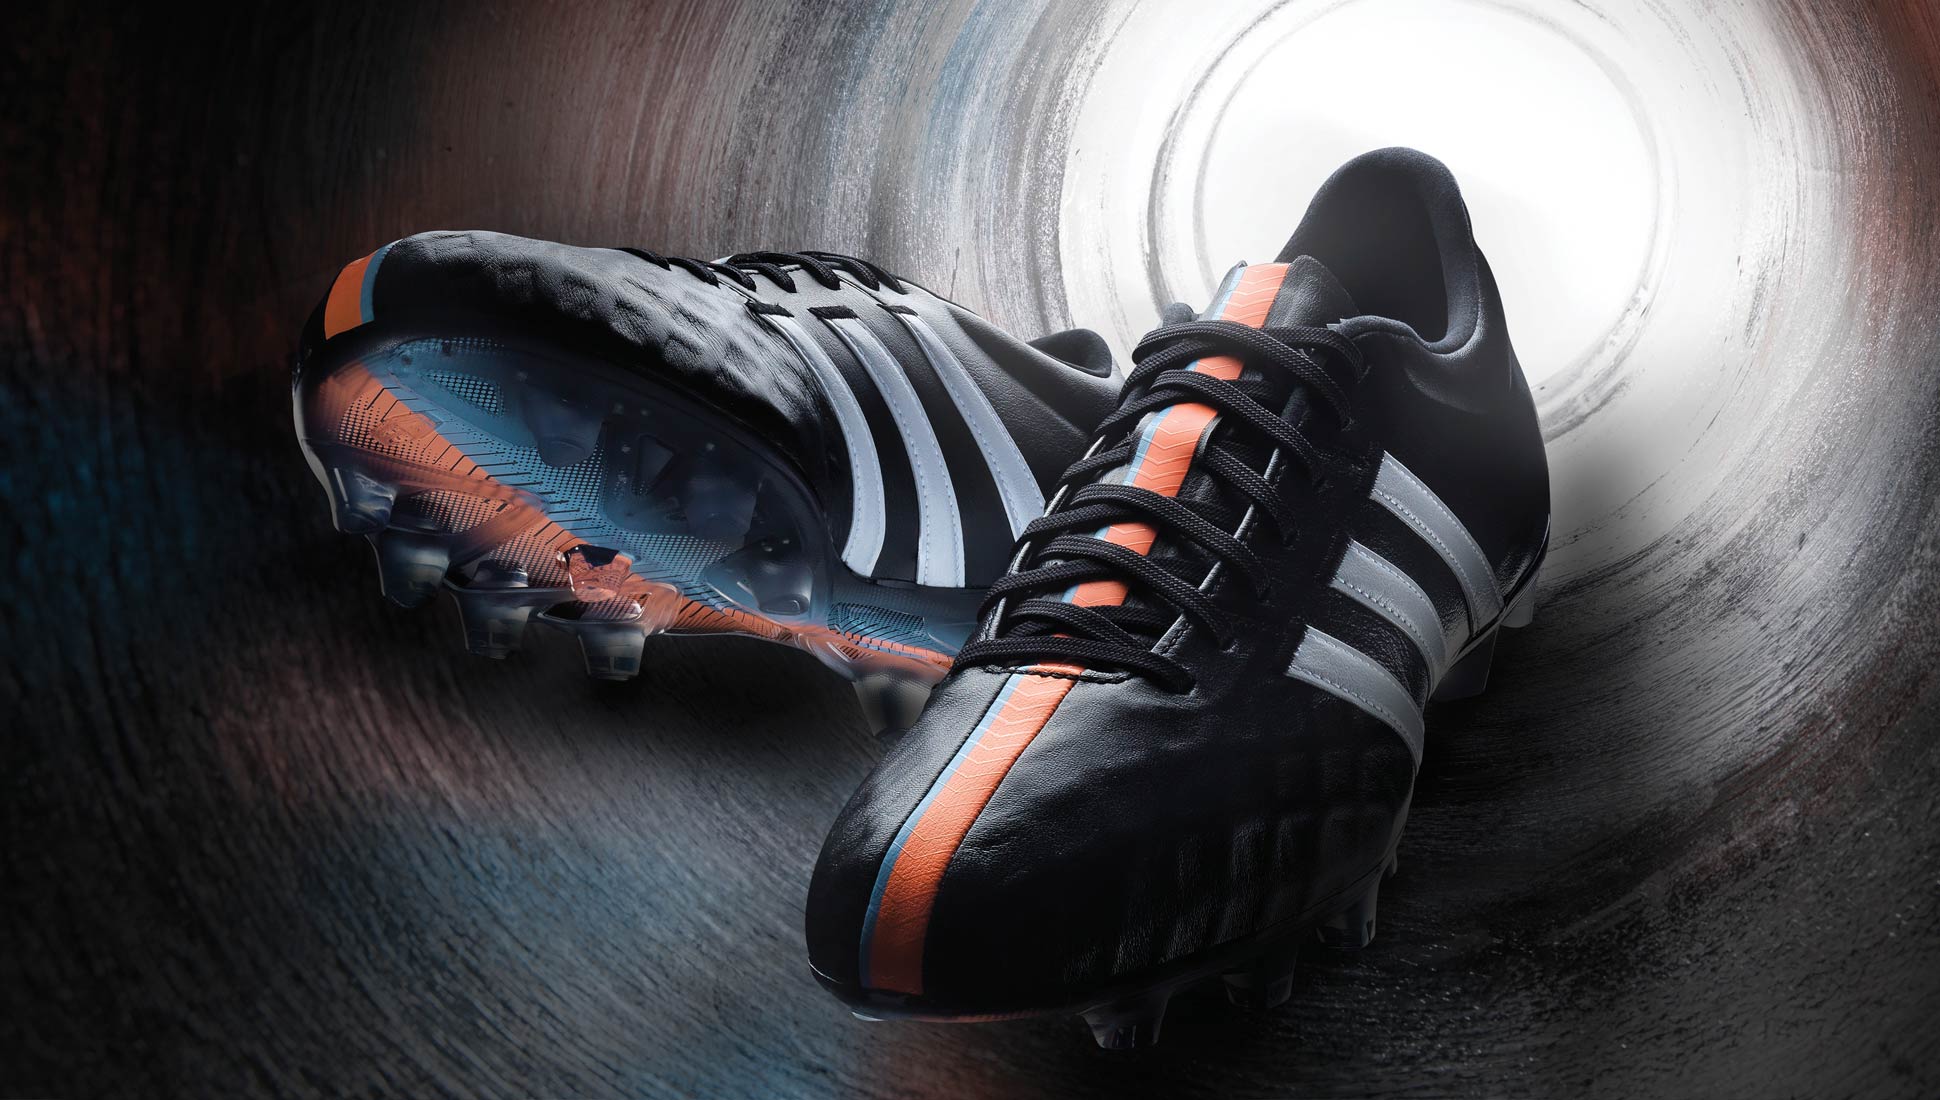 adidas 11pro football boots